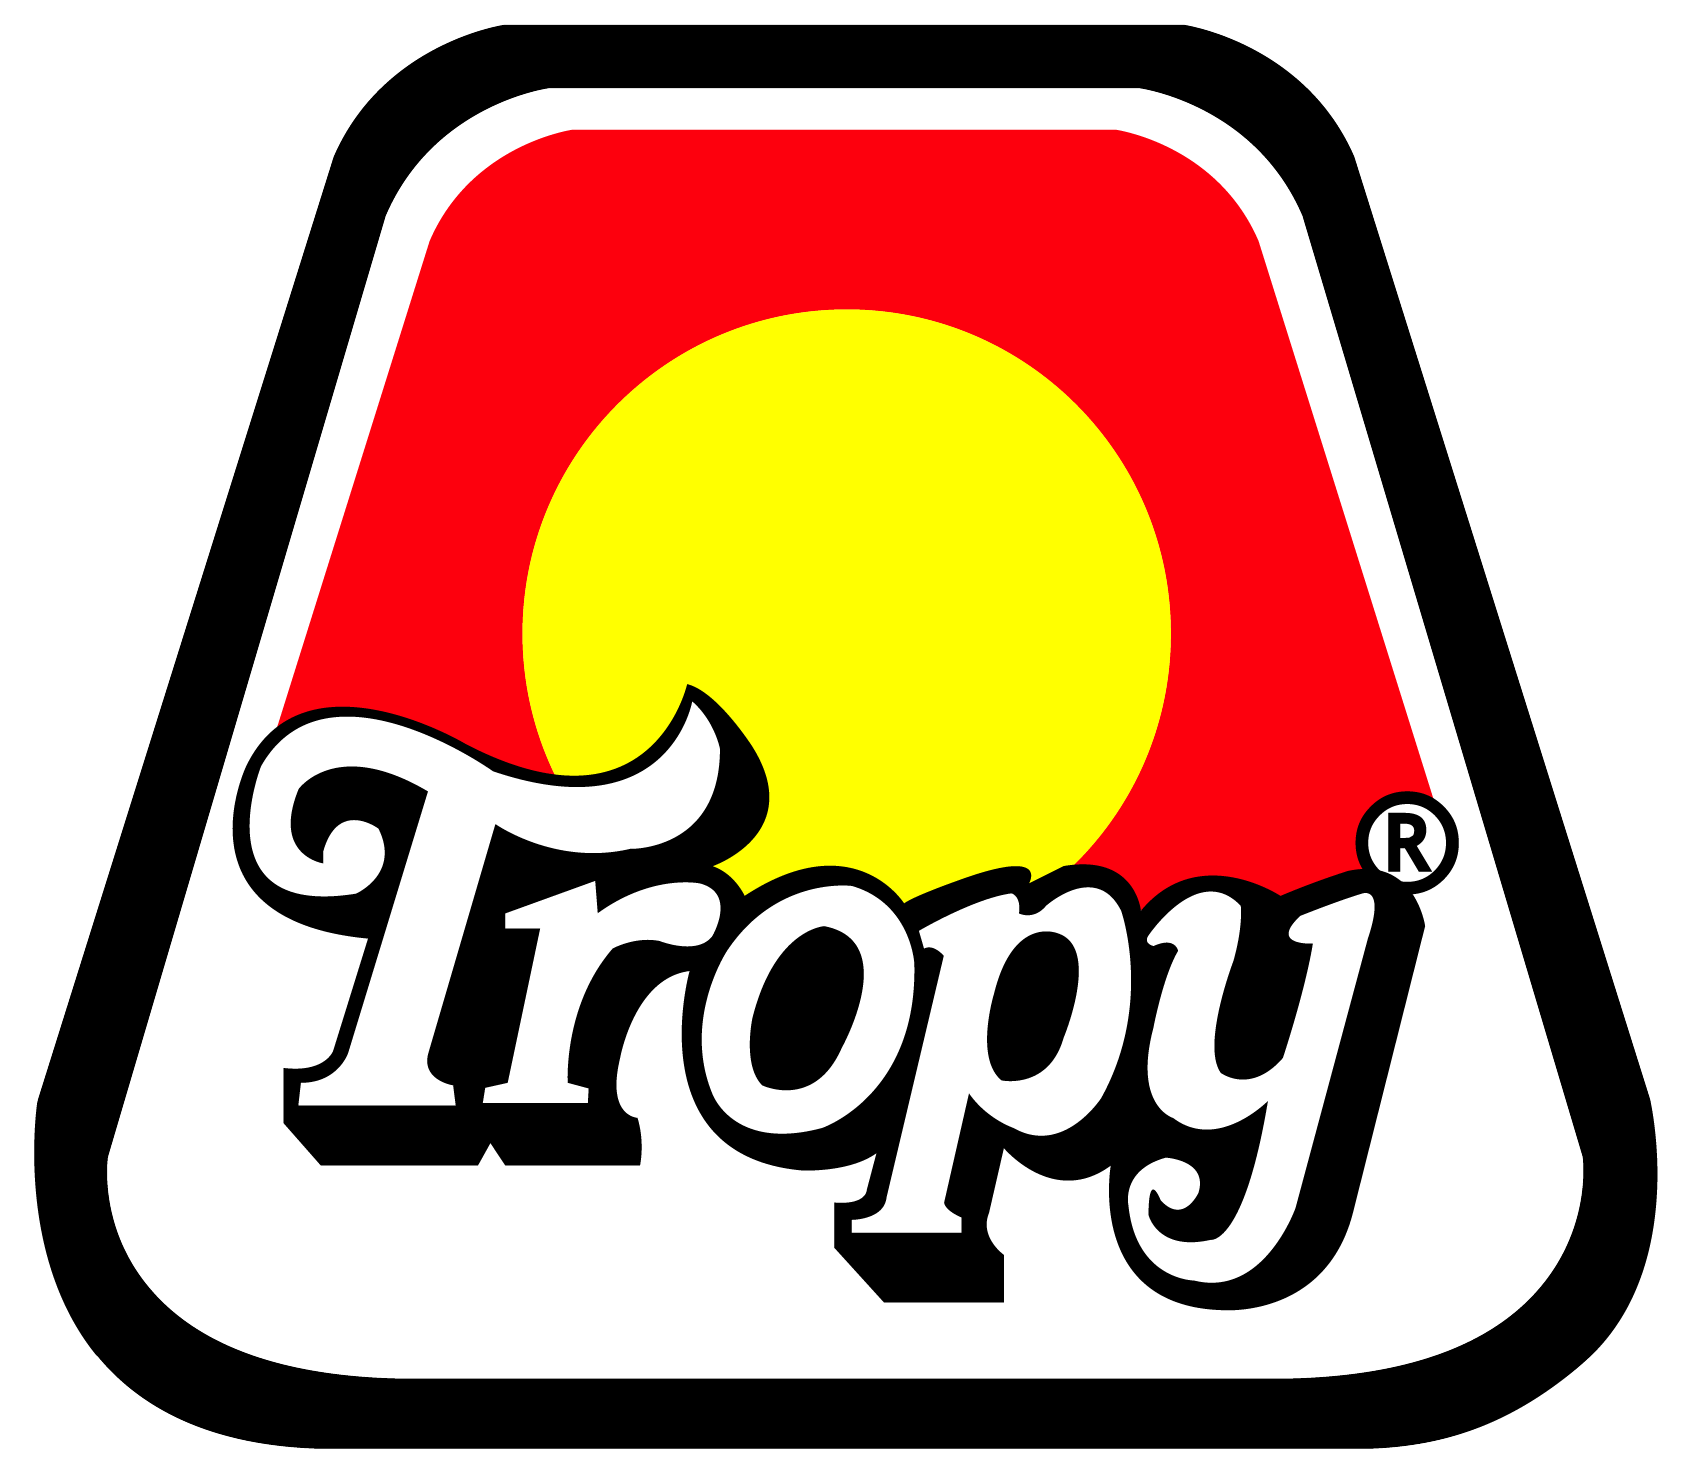 Logo Tropy